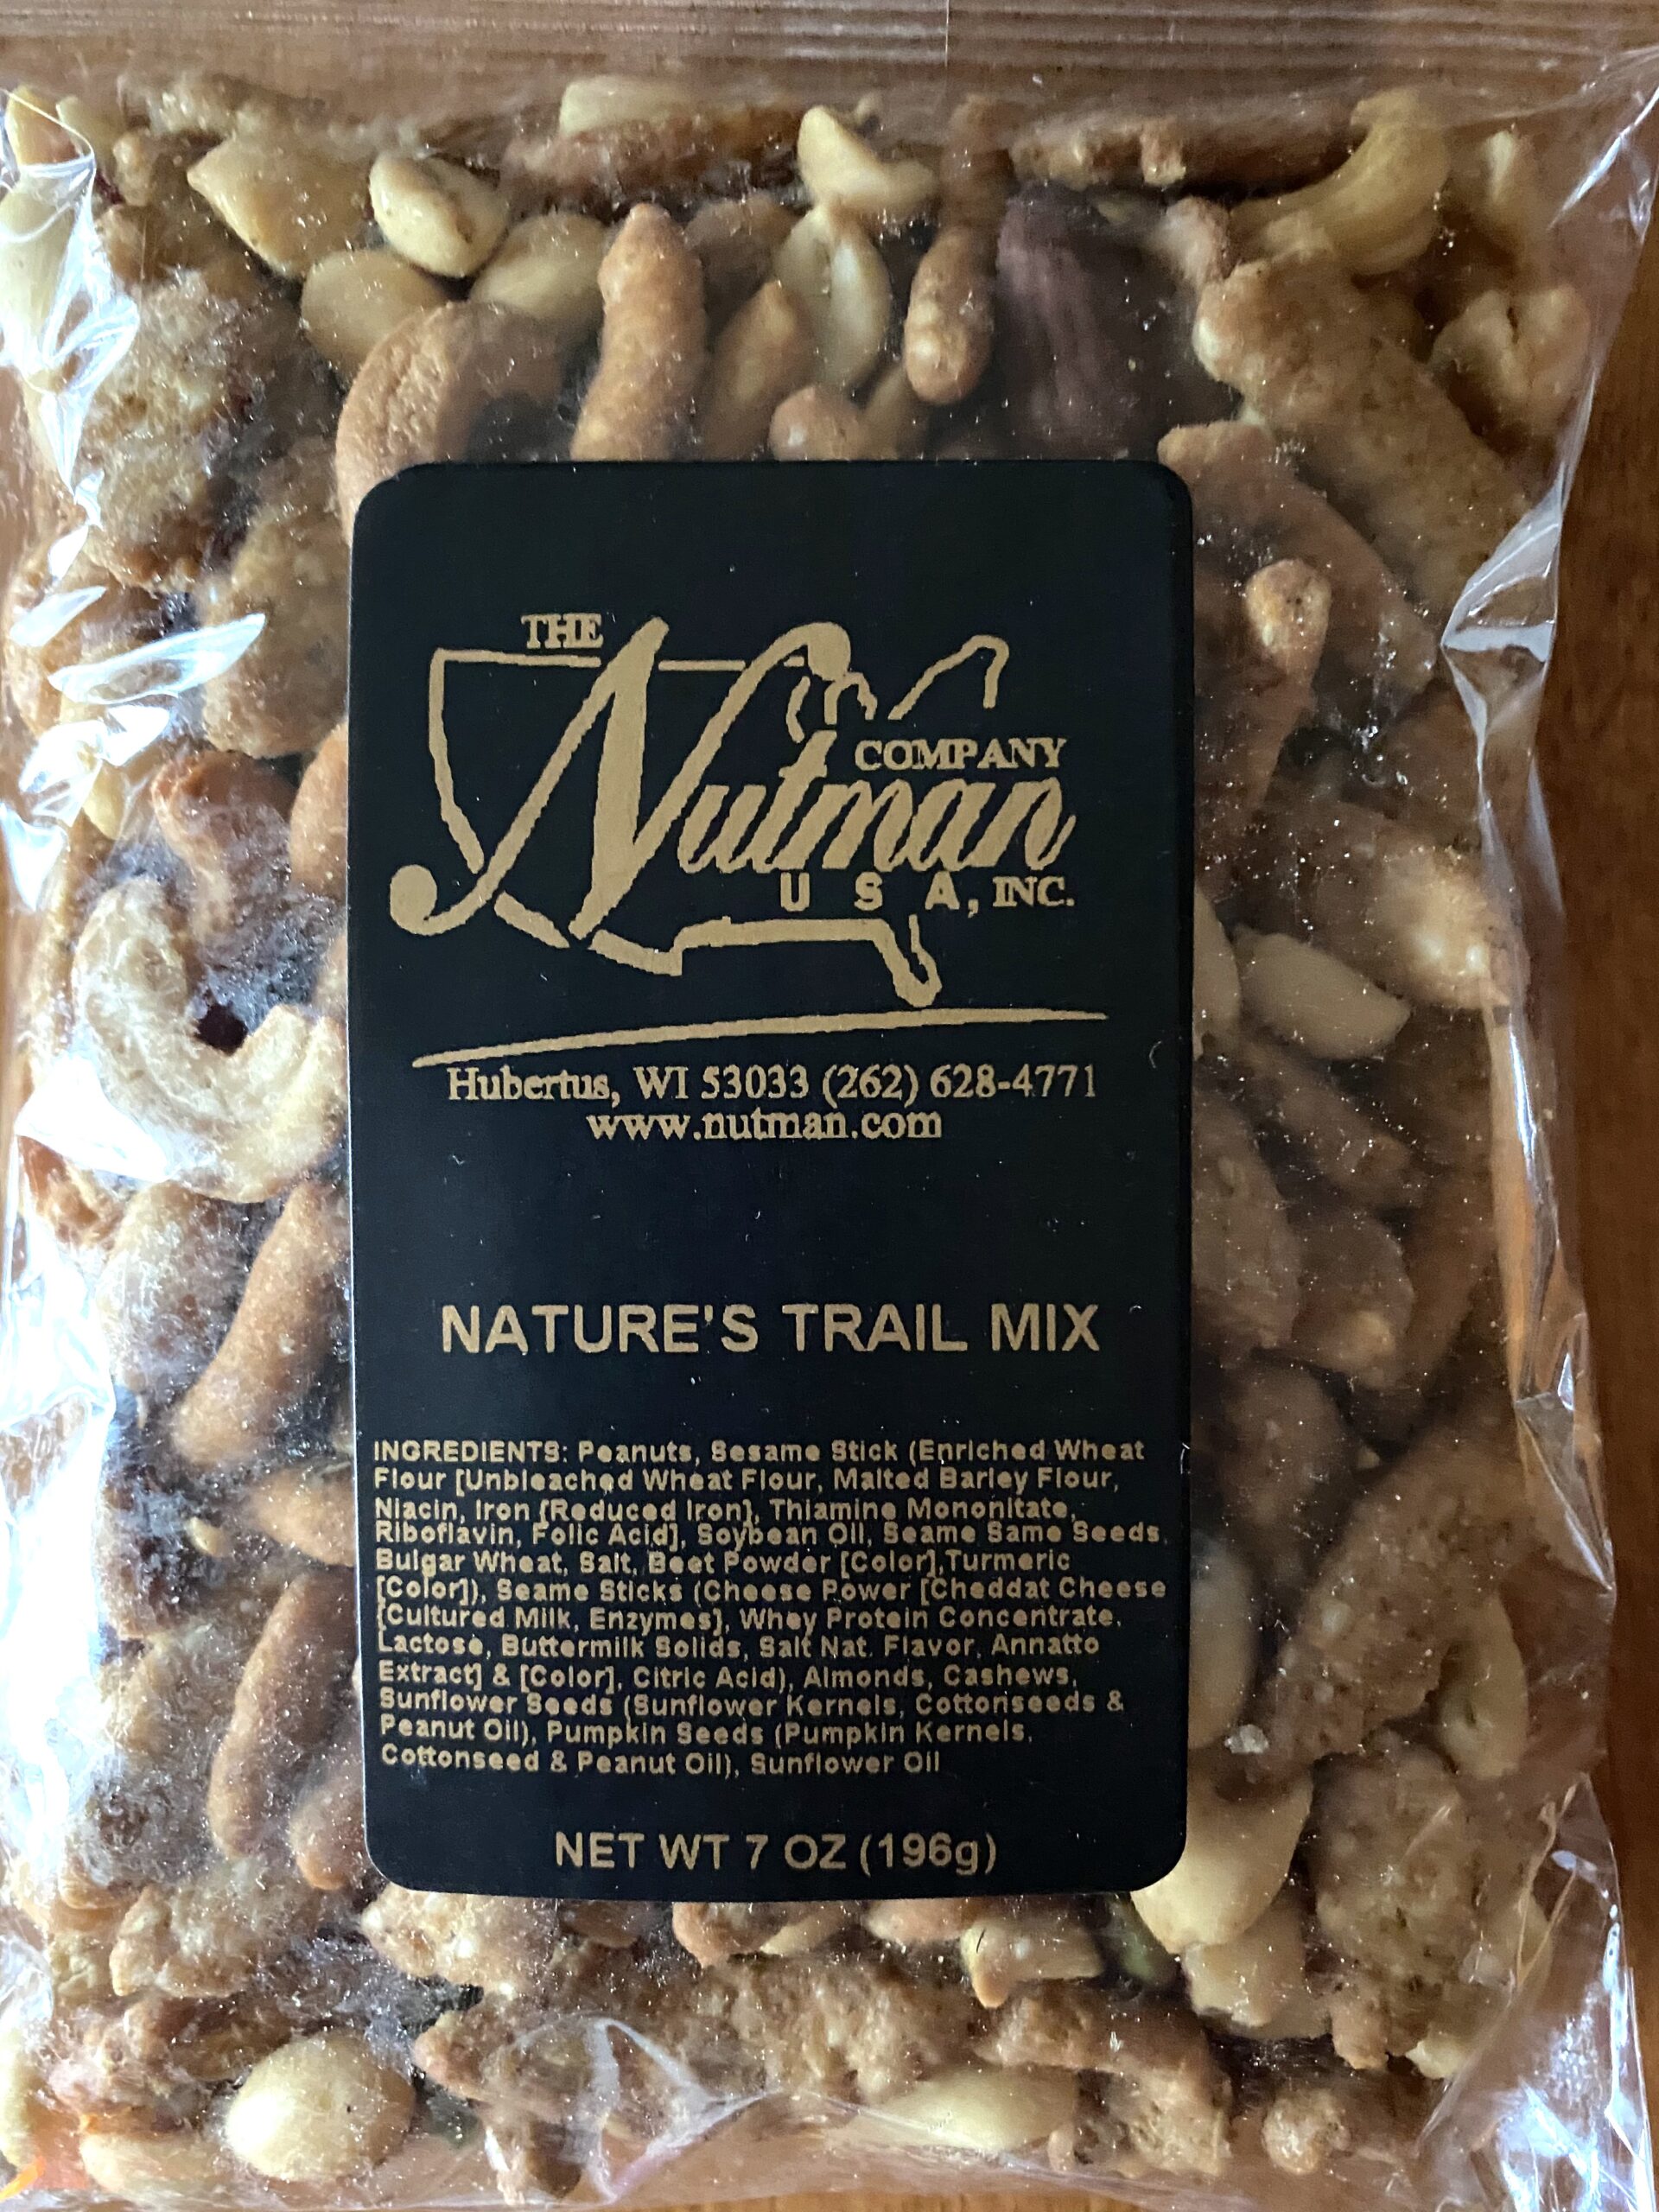 GORP Trail Mix (8 oz)  The Nutman Company USA, Inc.